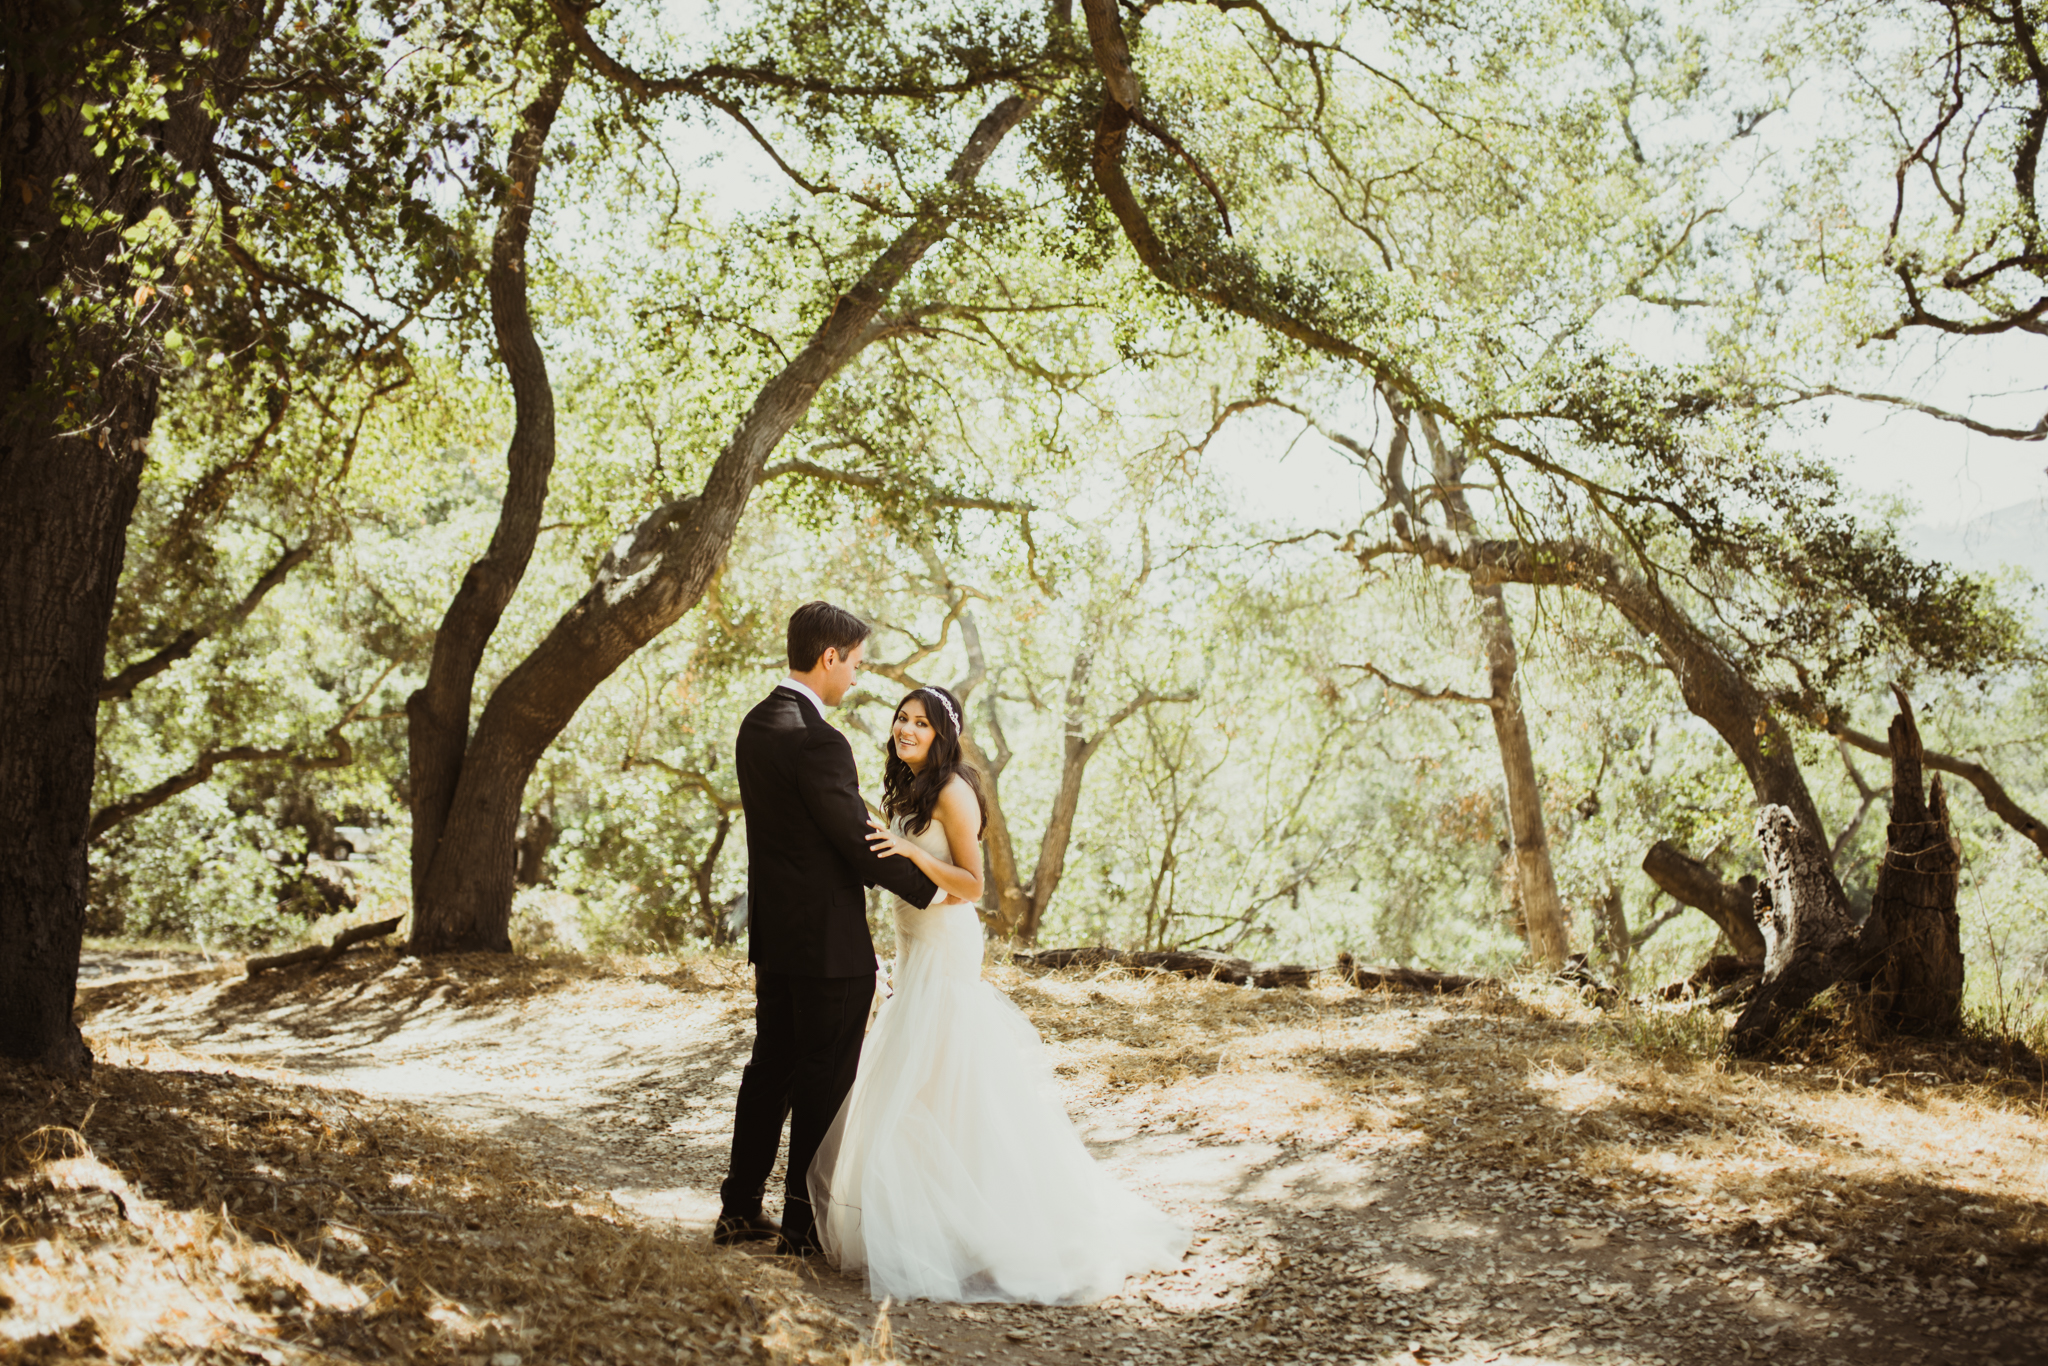 ©Isaiah & Taylor Photography - Inn of the Seventh Ray Wedding, Topanga Canyon California-56.jpg